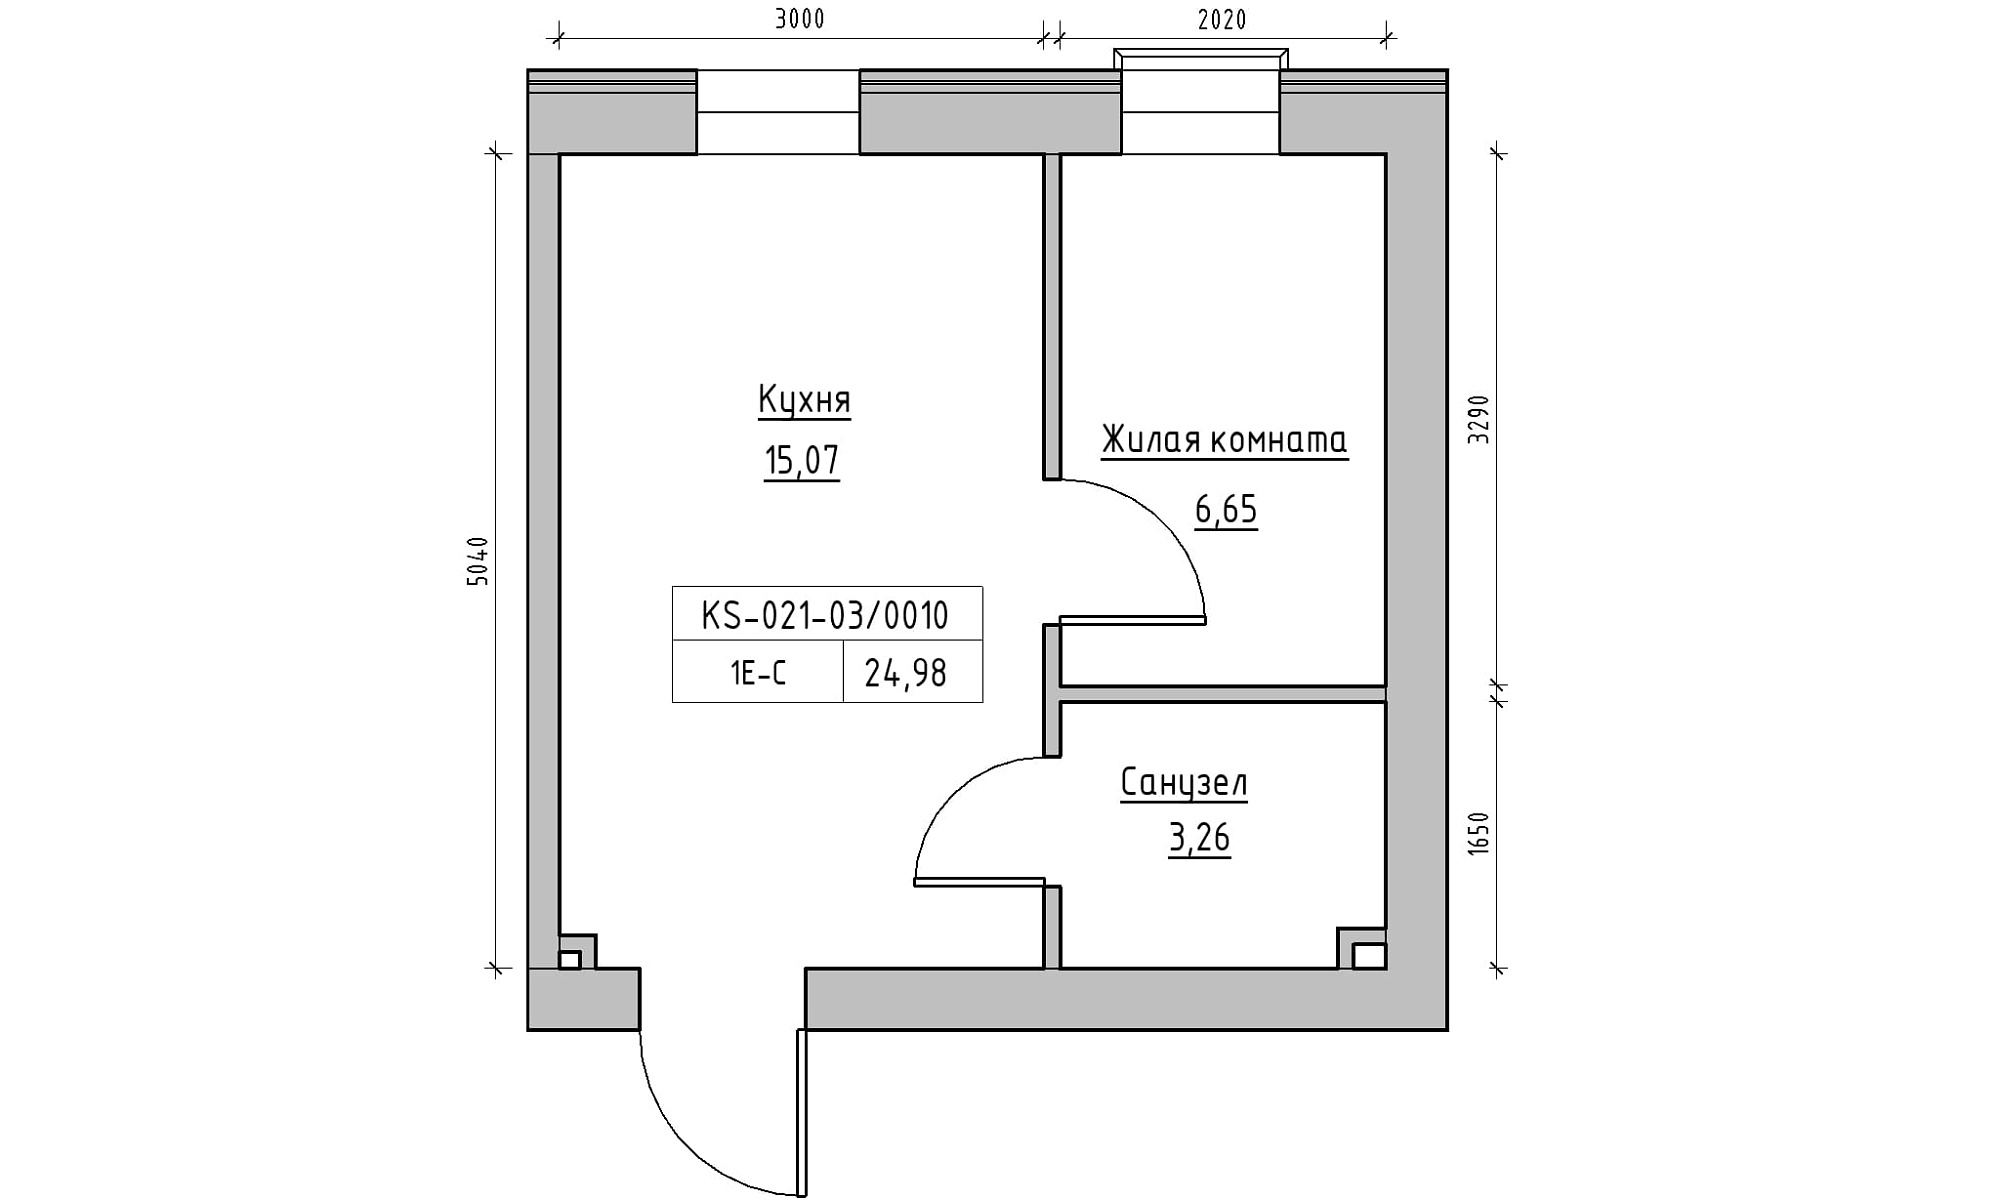 Planning 1-rm flats area 24.98m2, KS-021-03/0010.